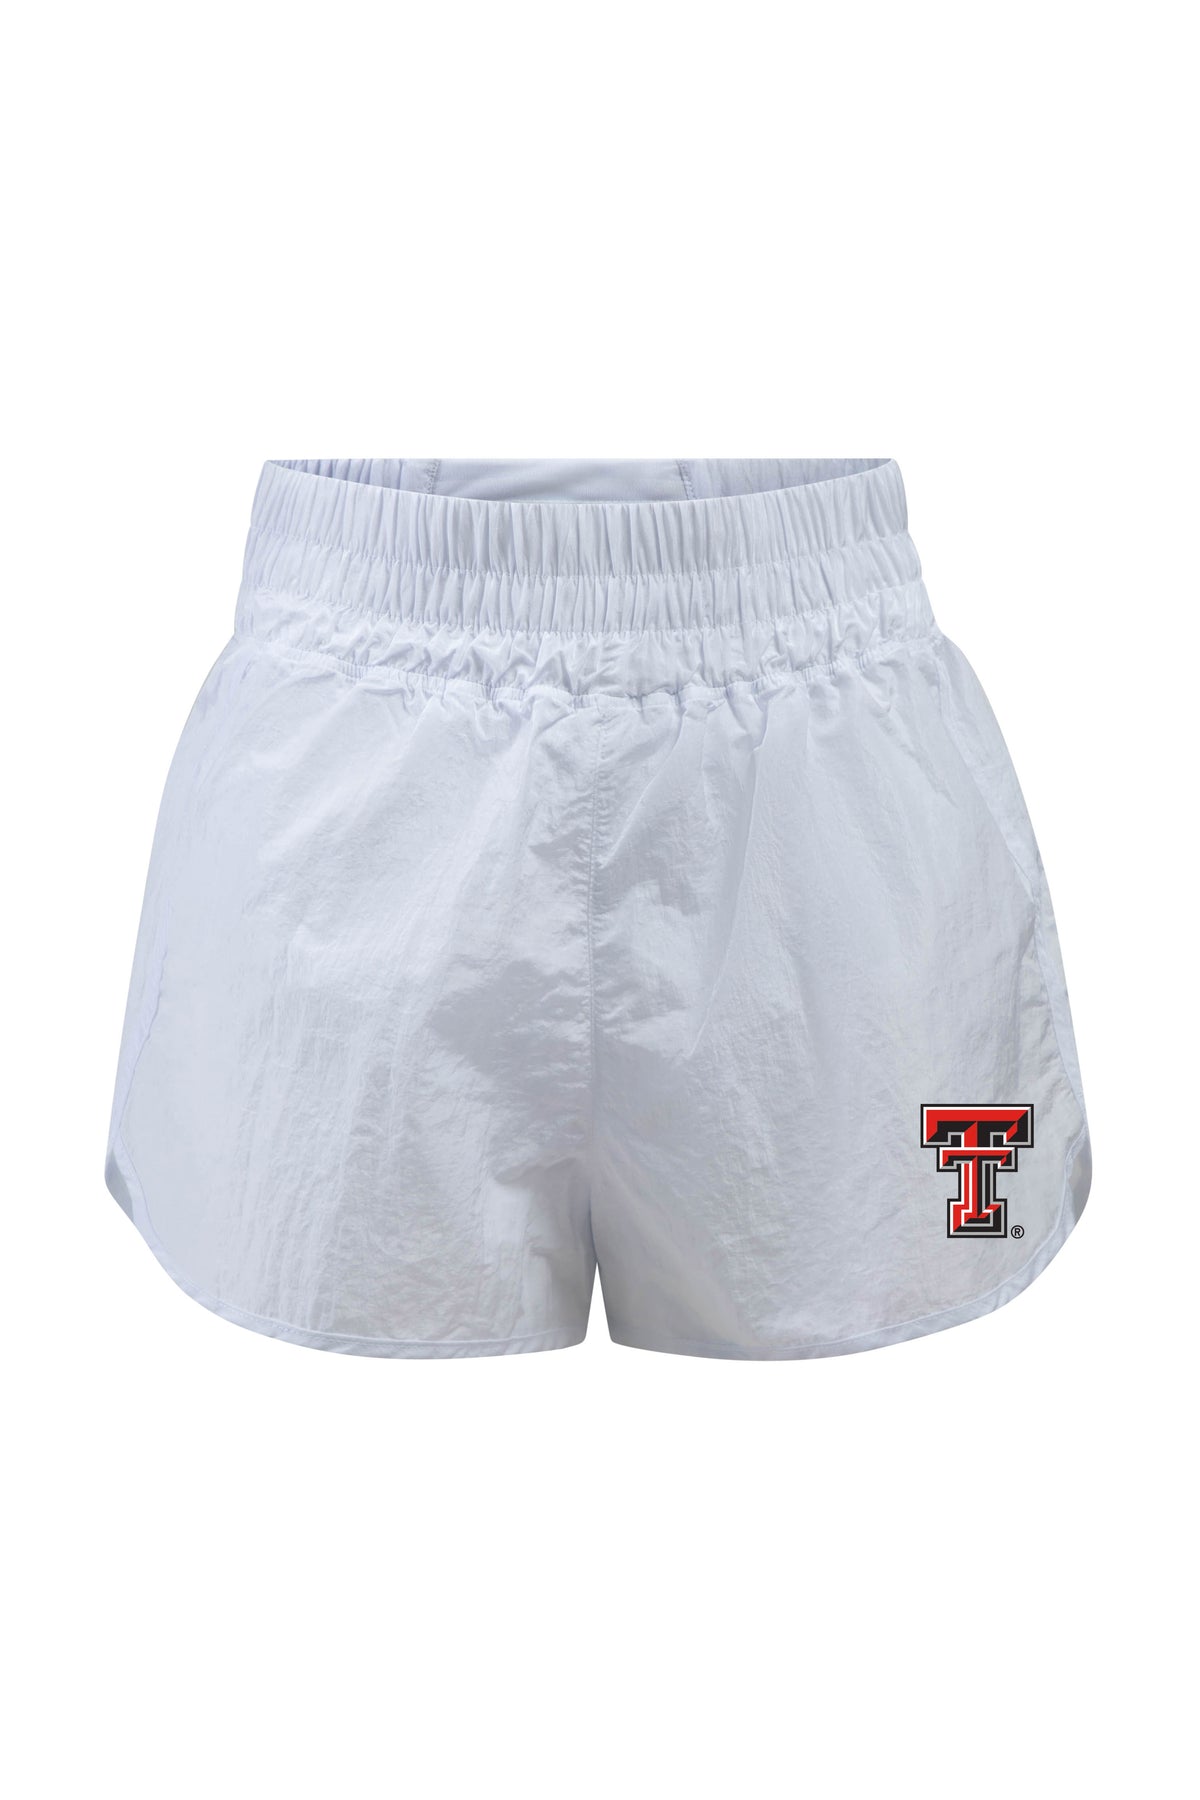 Texas Tech University Boxer Short